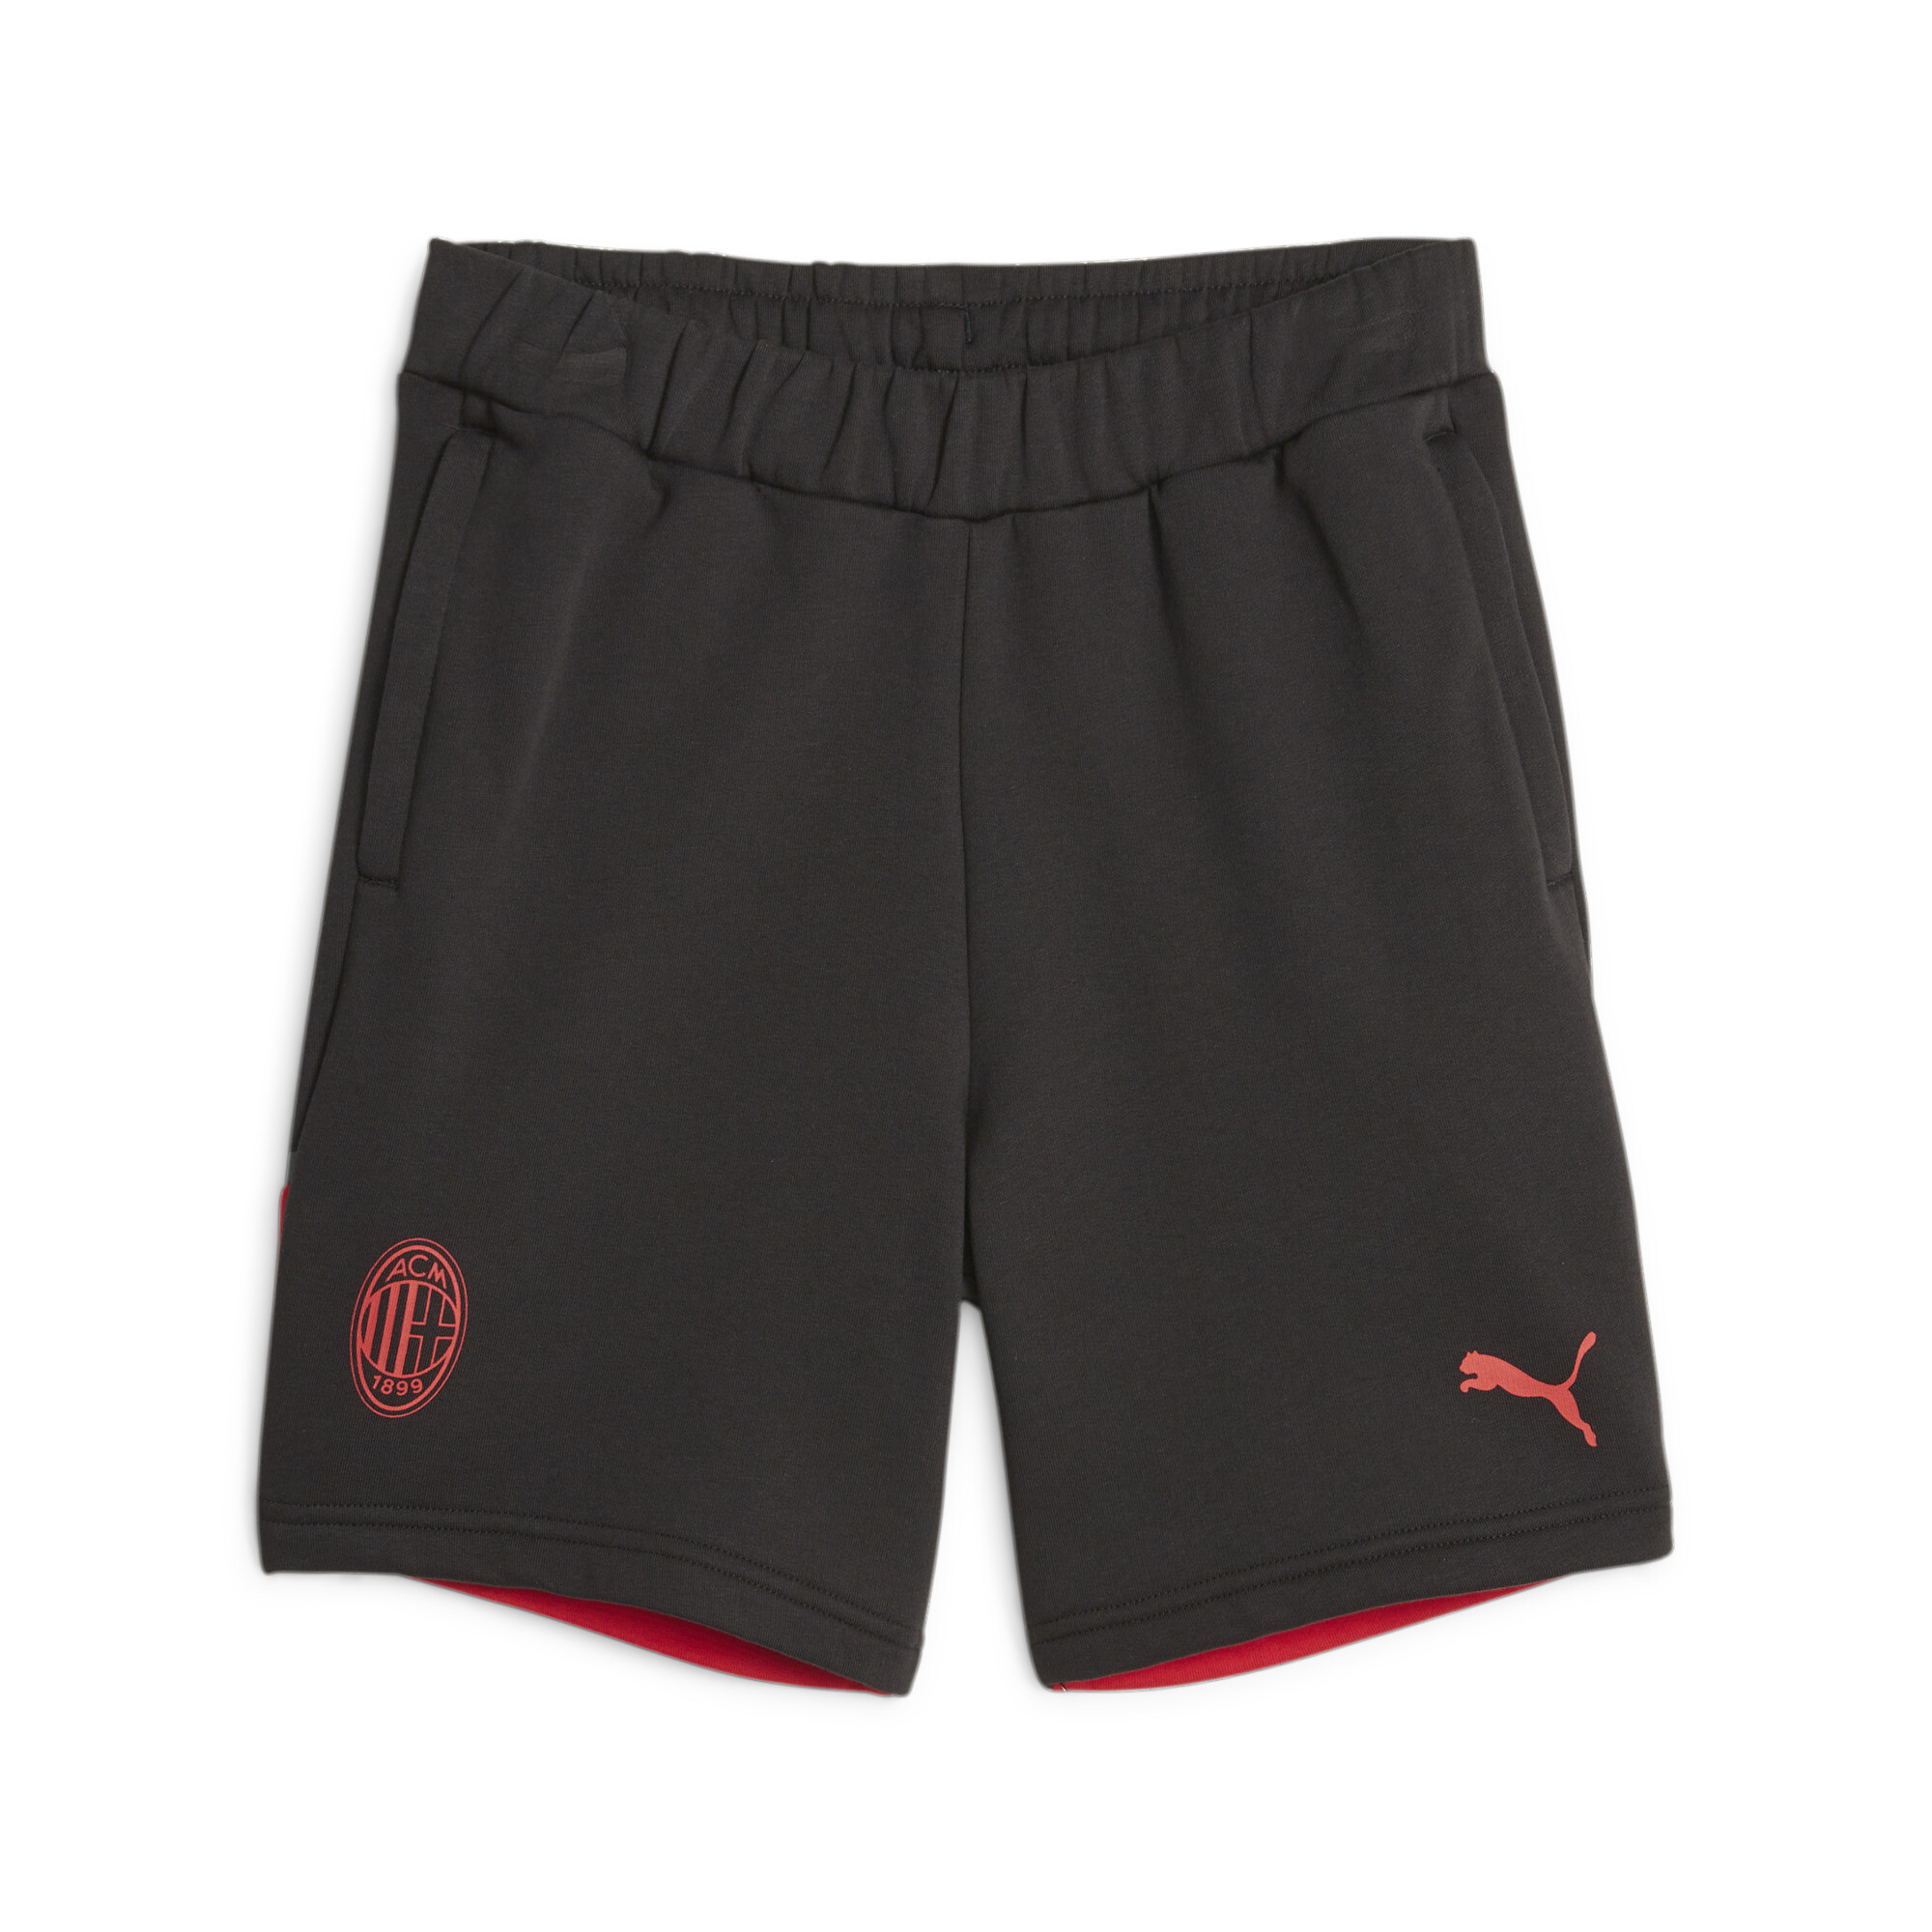 Puma AC Milan Football Casuals Youth Shorts, Black, Size 7-8Y, Clothing